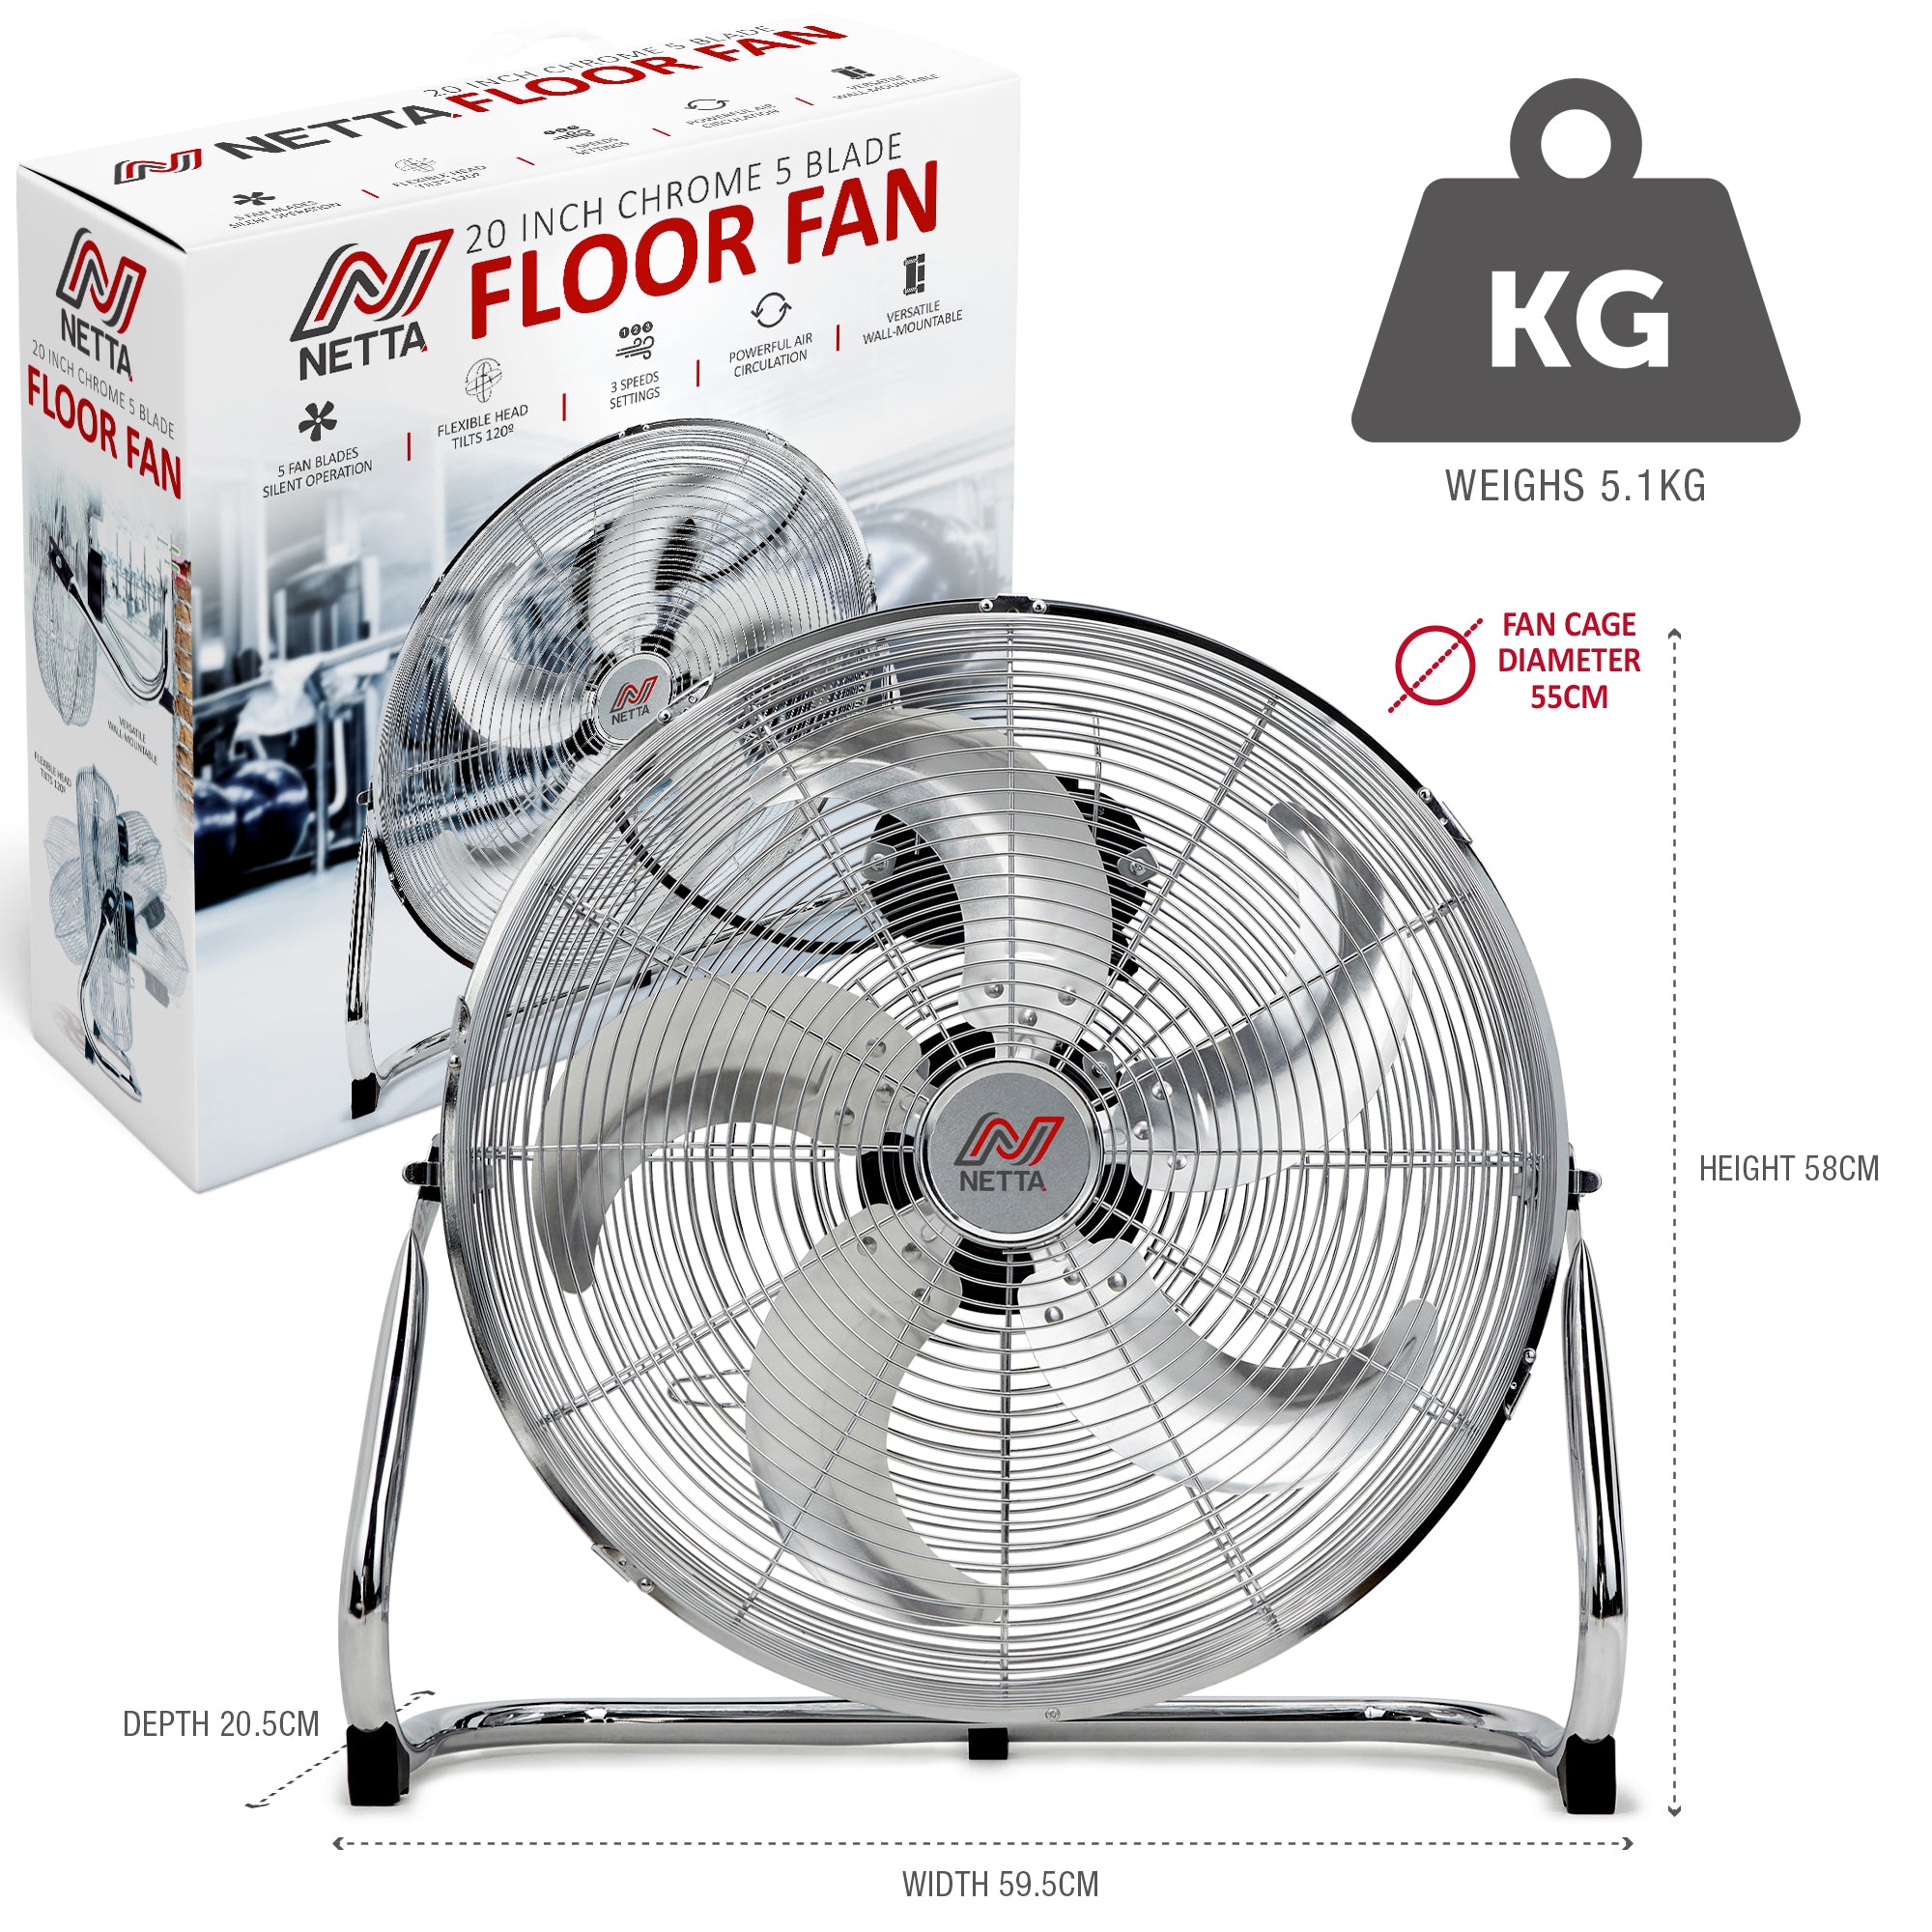 NETTA 20 Inch Gym Floor Fan - Chrome